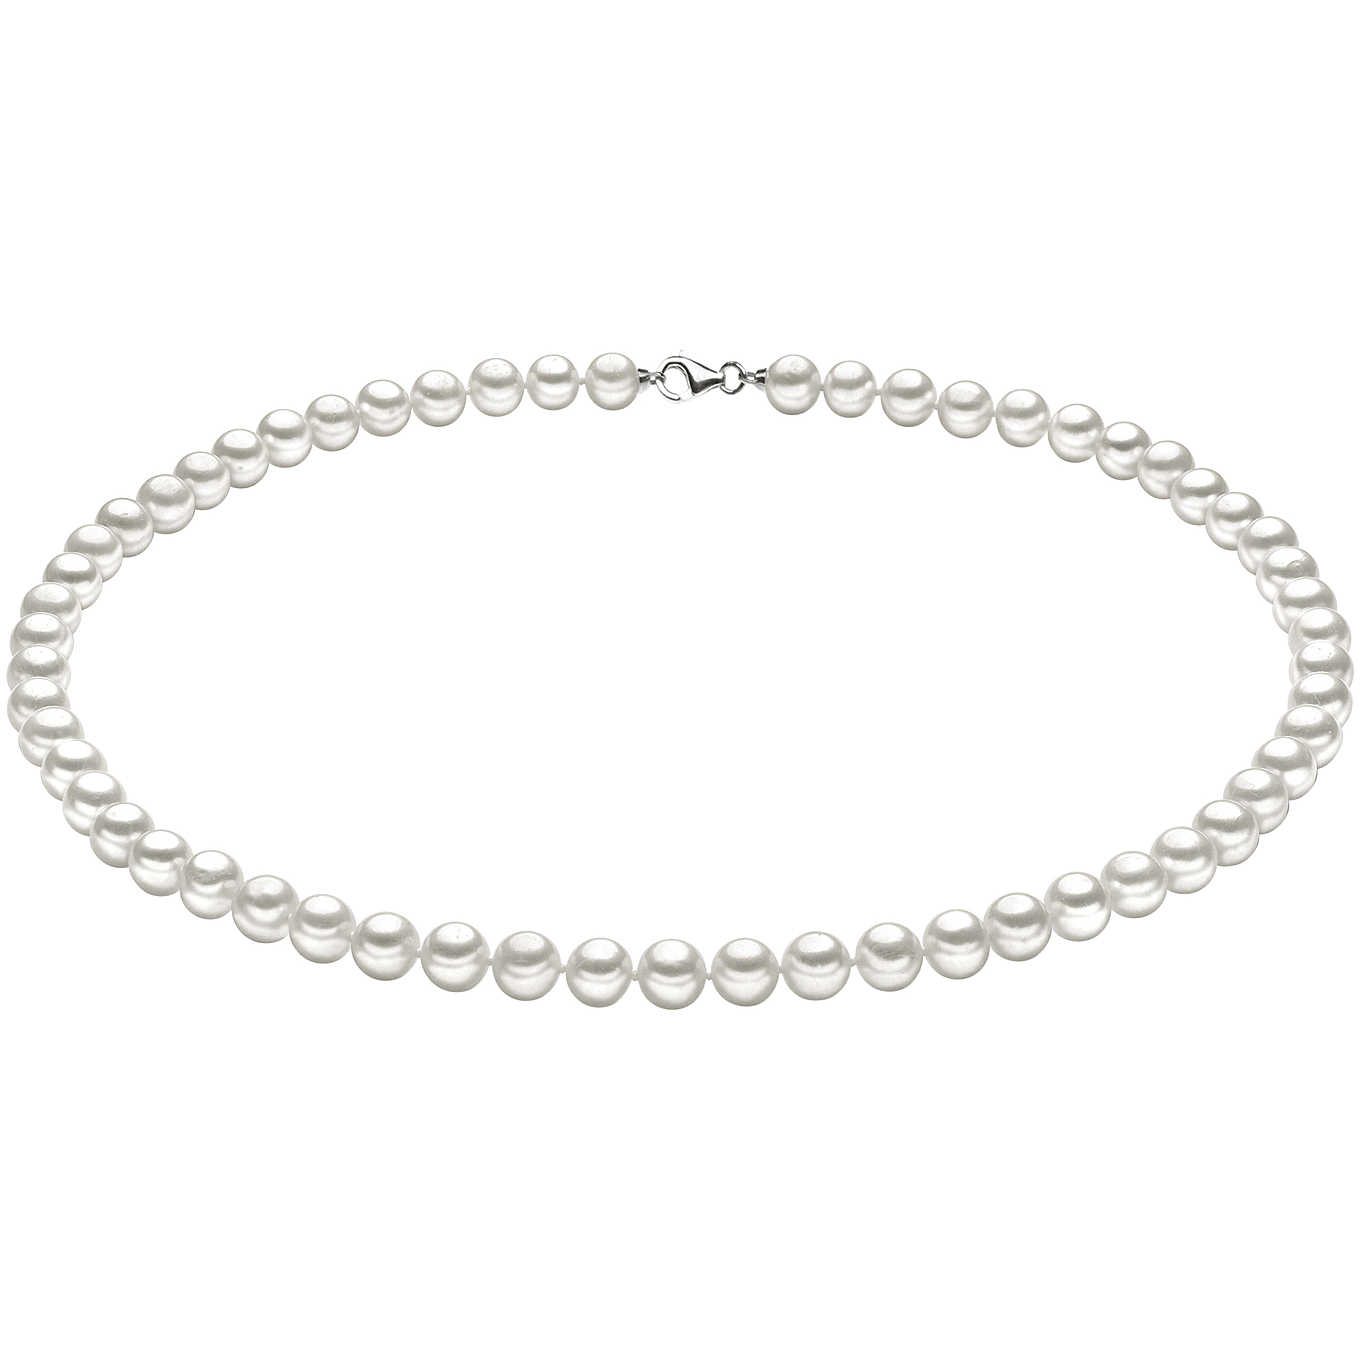 Women’s Necklace Comete Gioielliery Pearls Silver FWQ 104 S